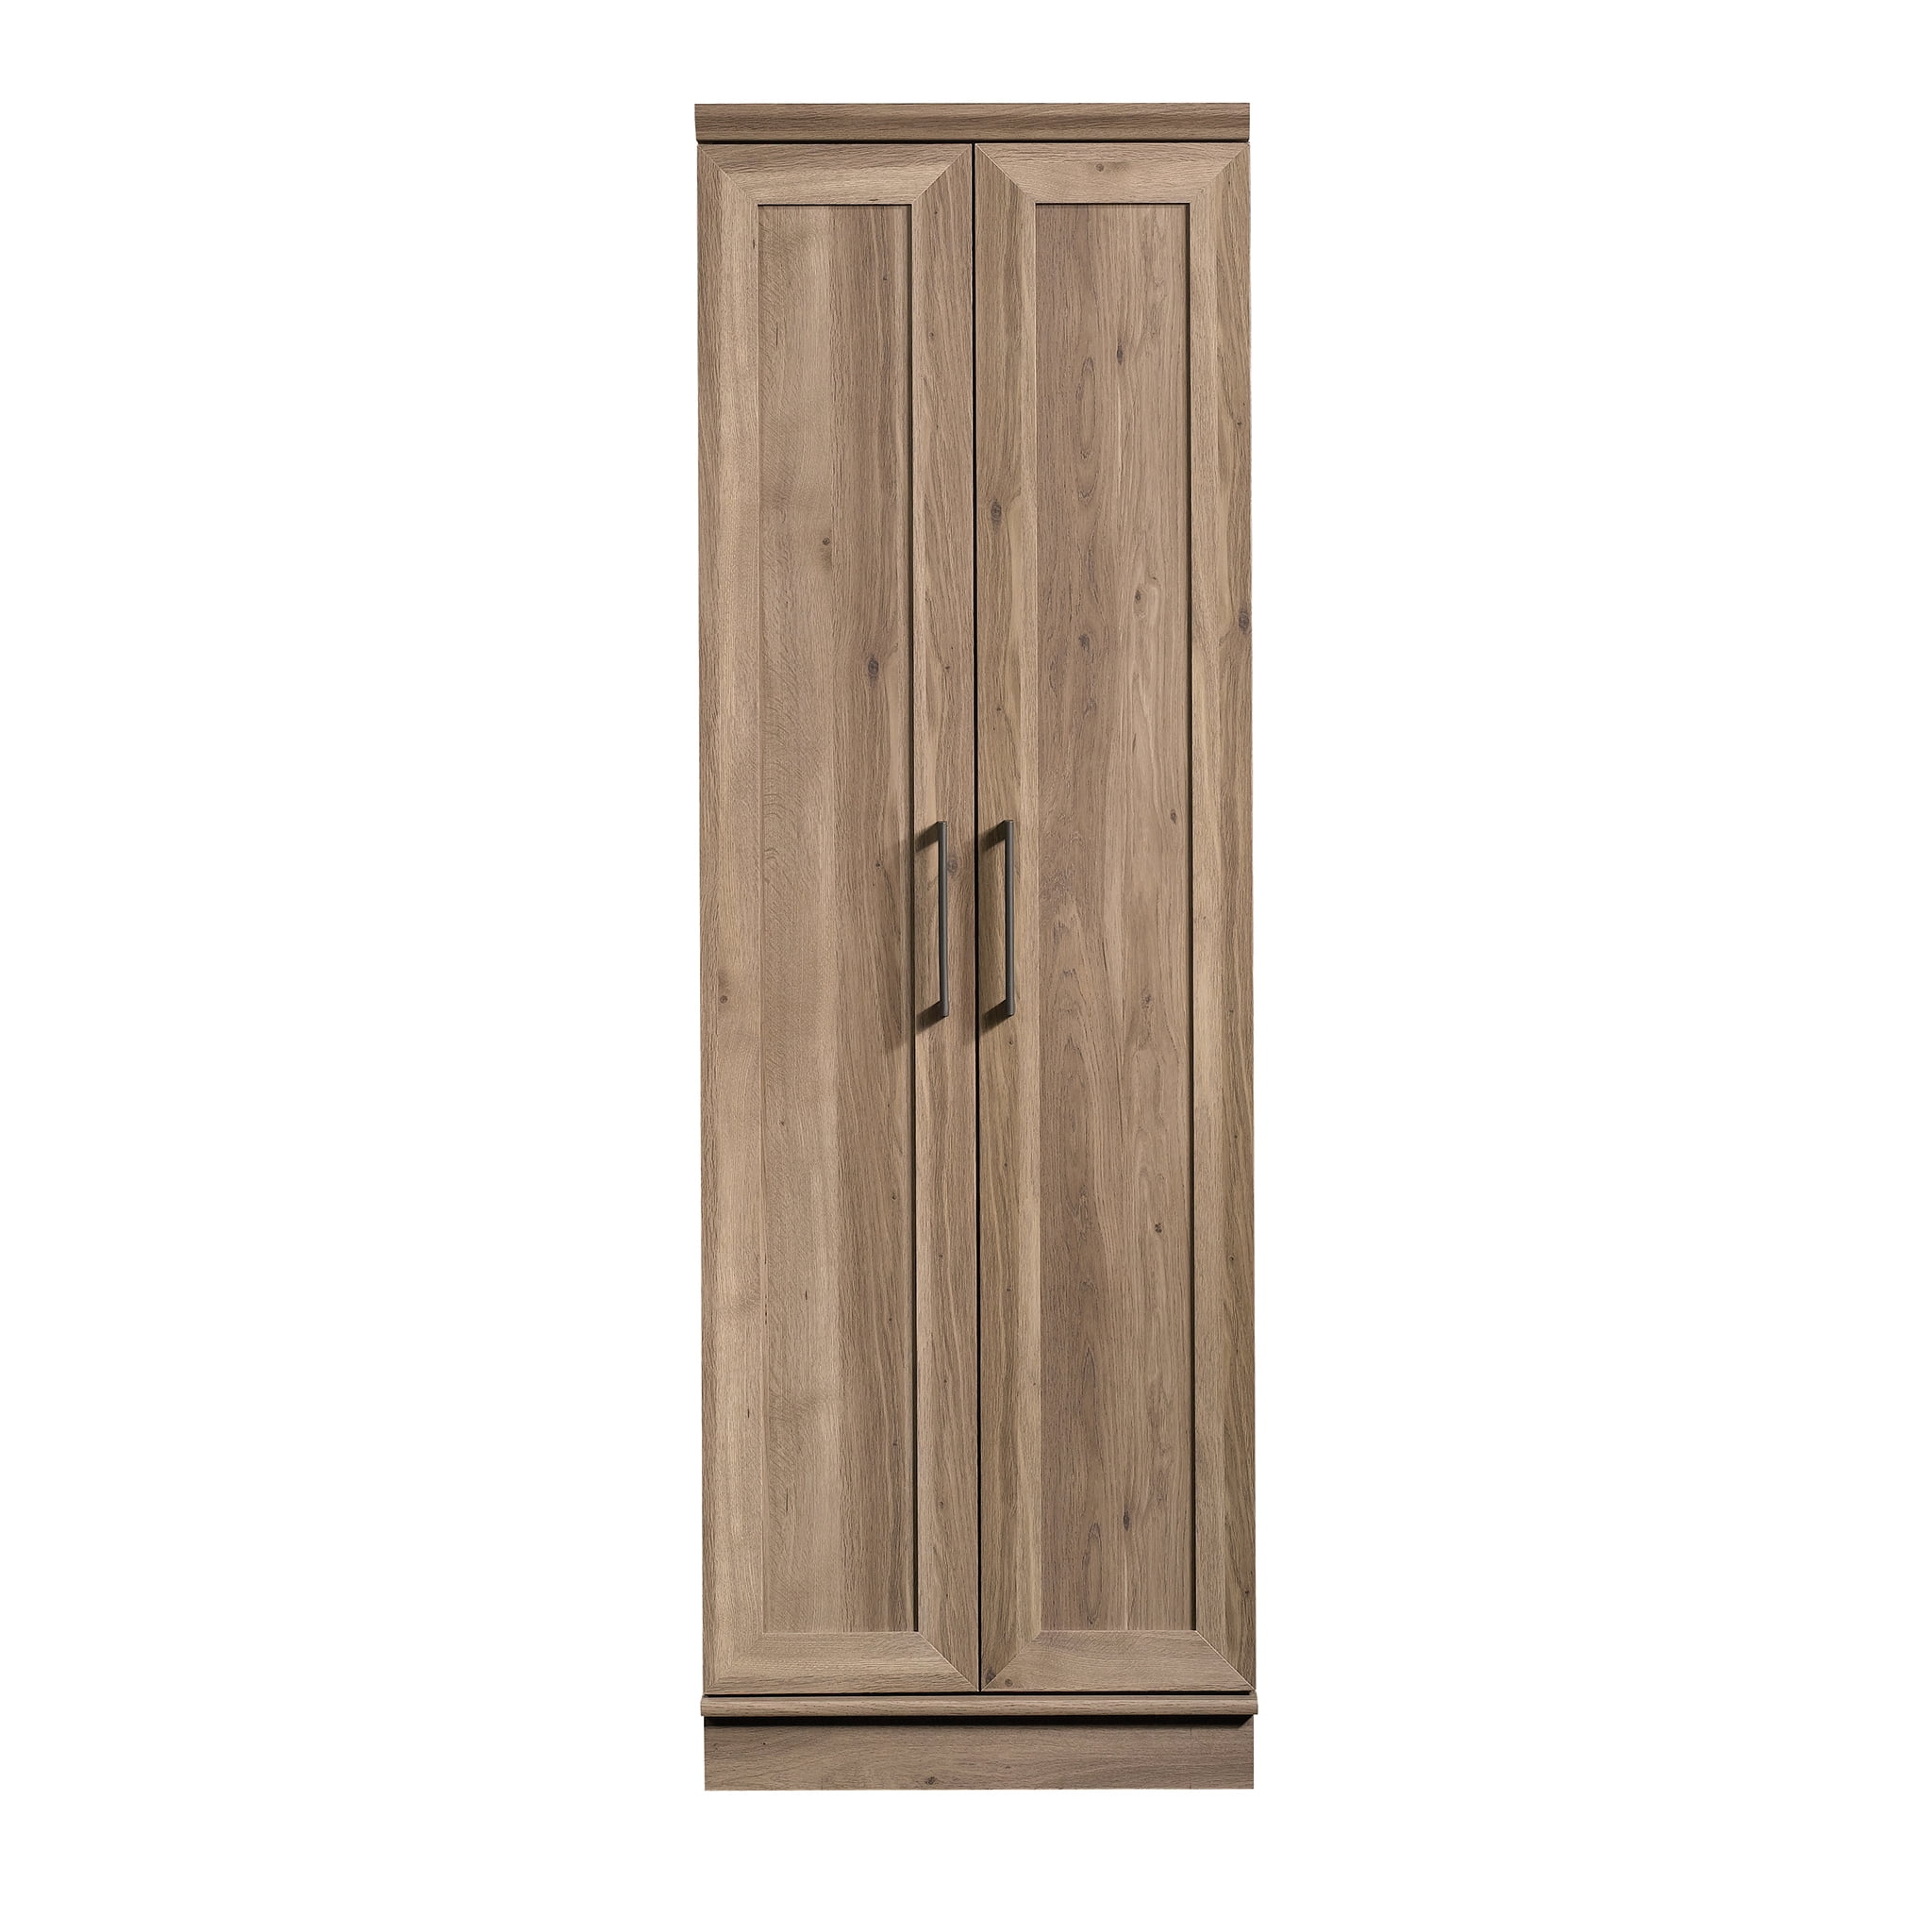 Sauder HomePlus 2-Door Storage Cabinet, Salt Oak Finish - 1